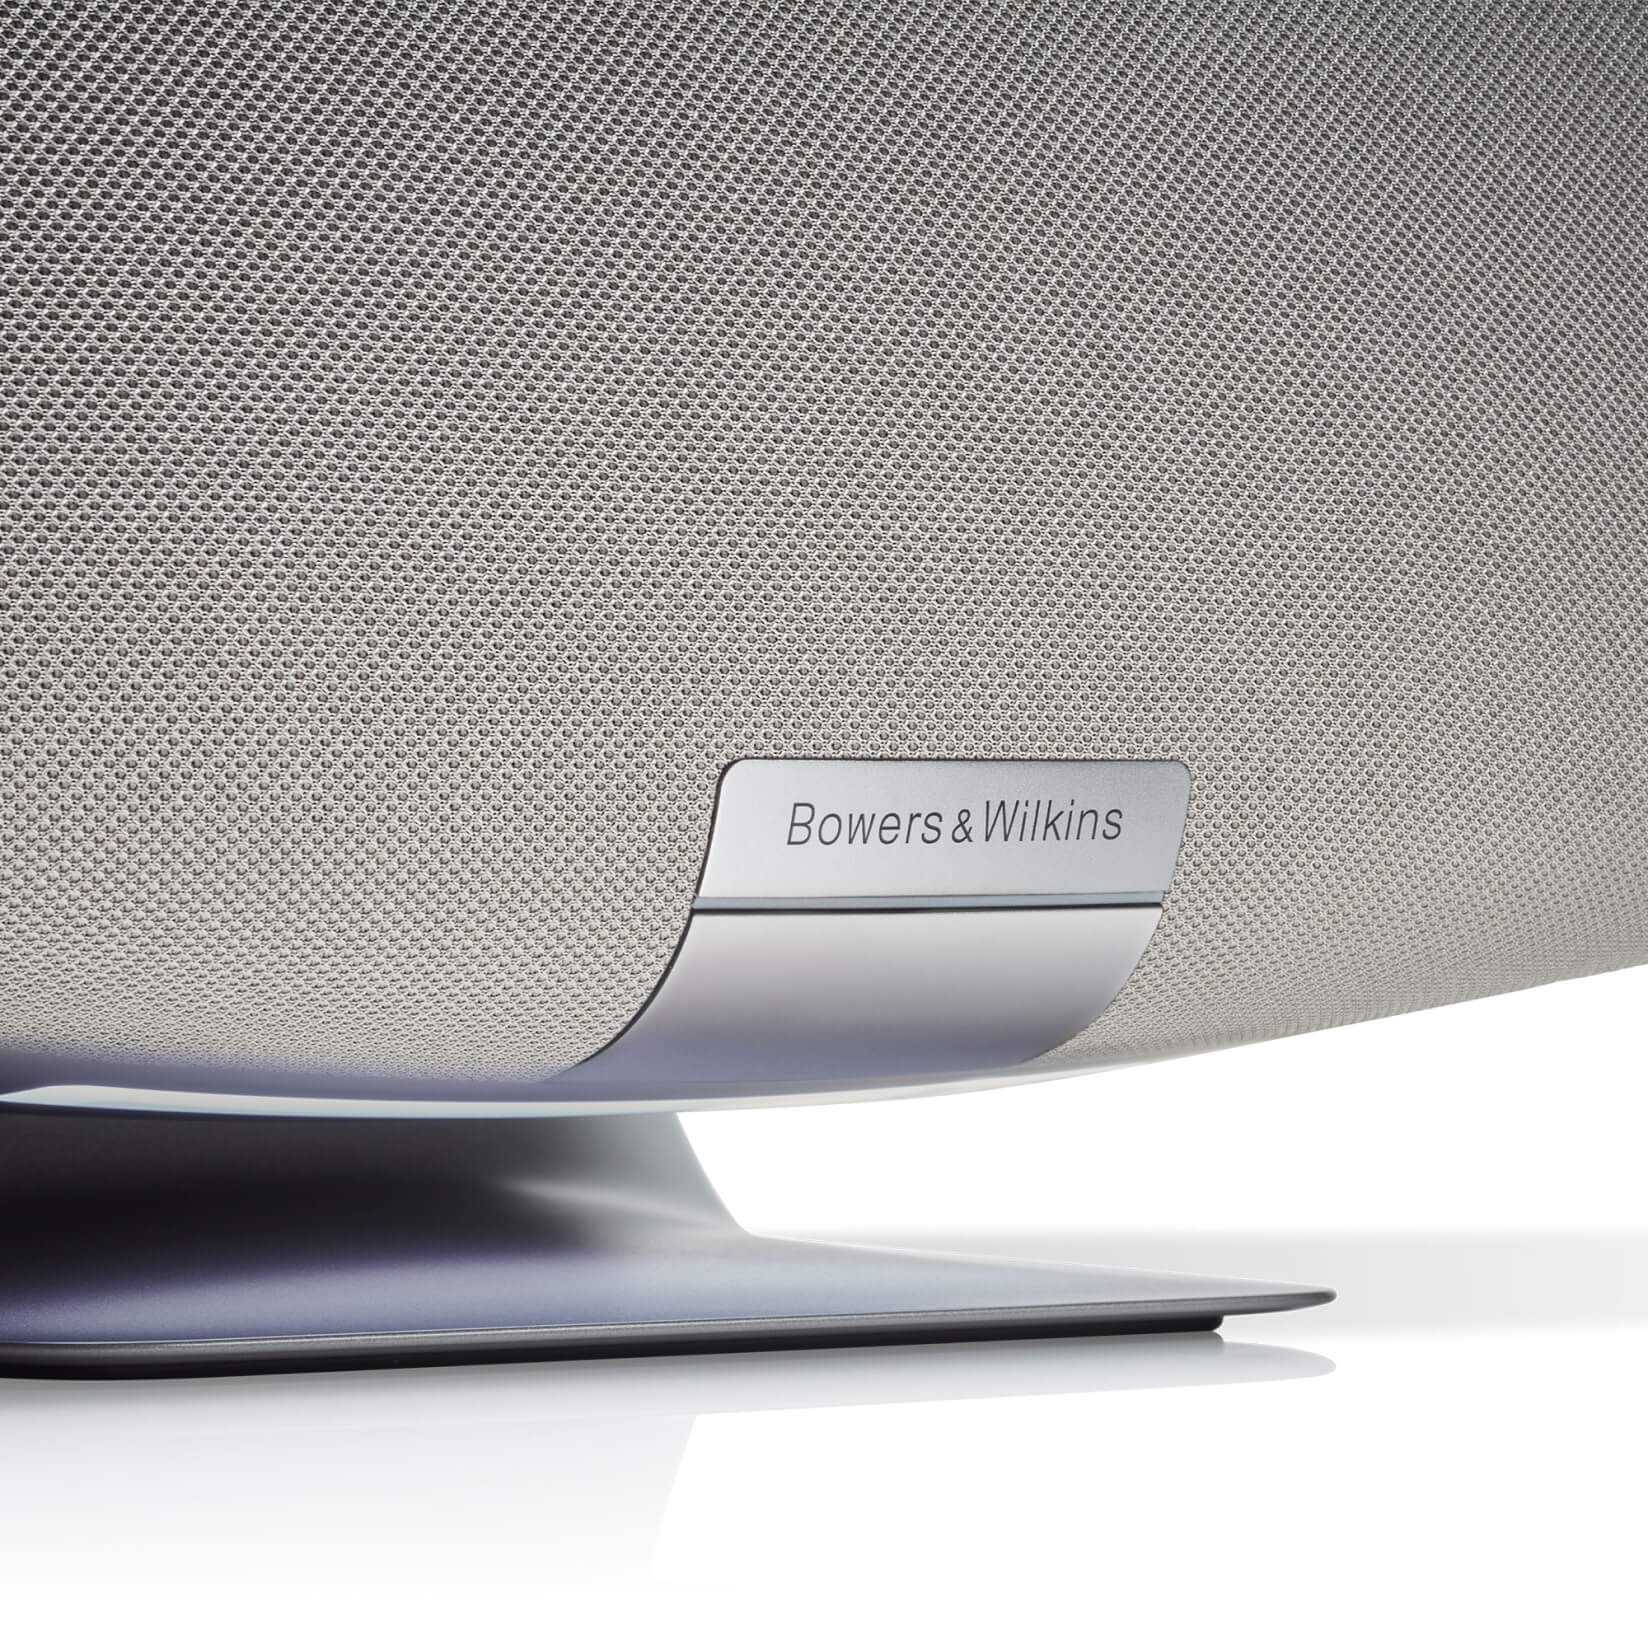 Introducing the all-new Zeppelin Wireless speaker| Bowers & Wilkins